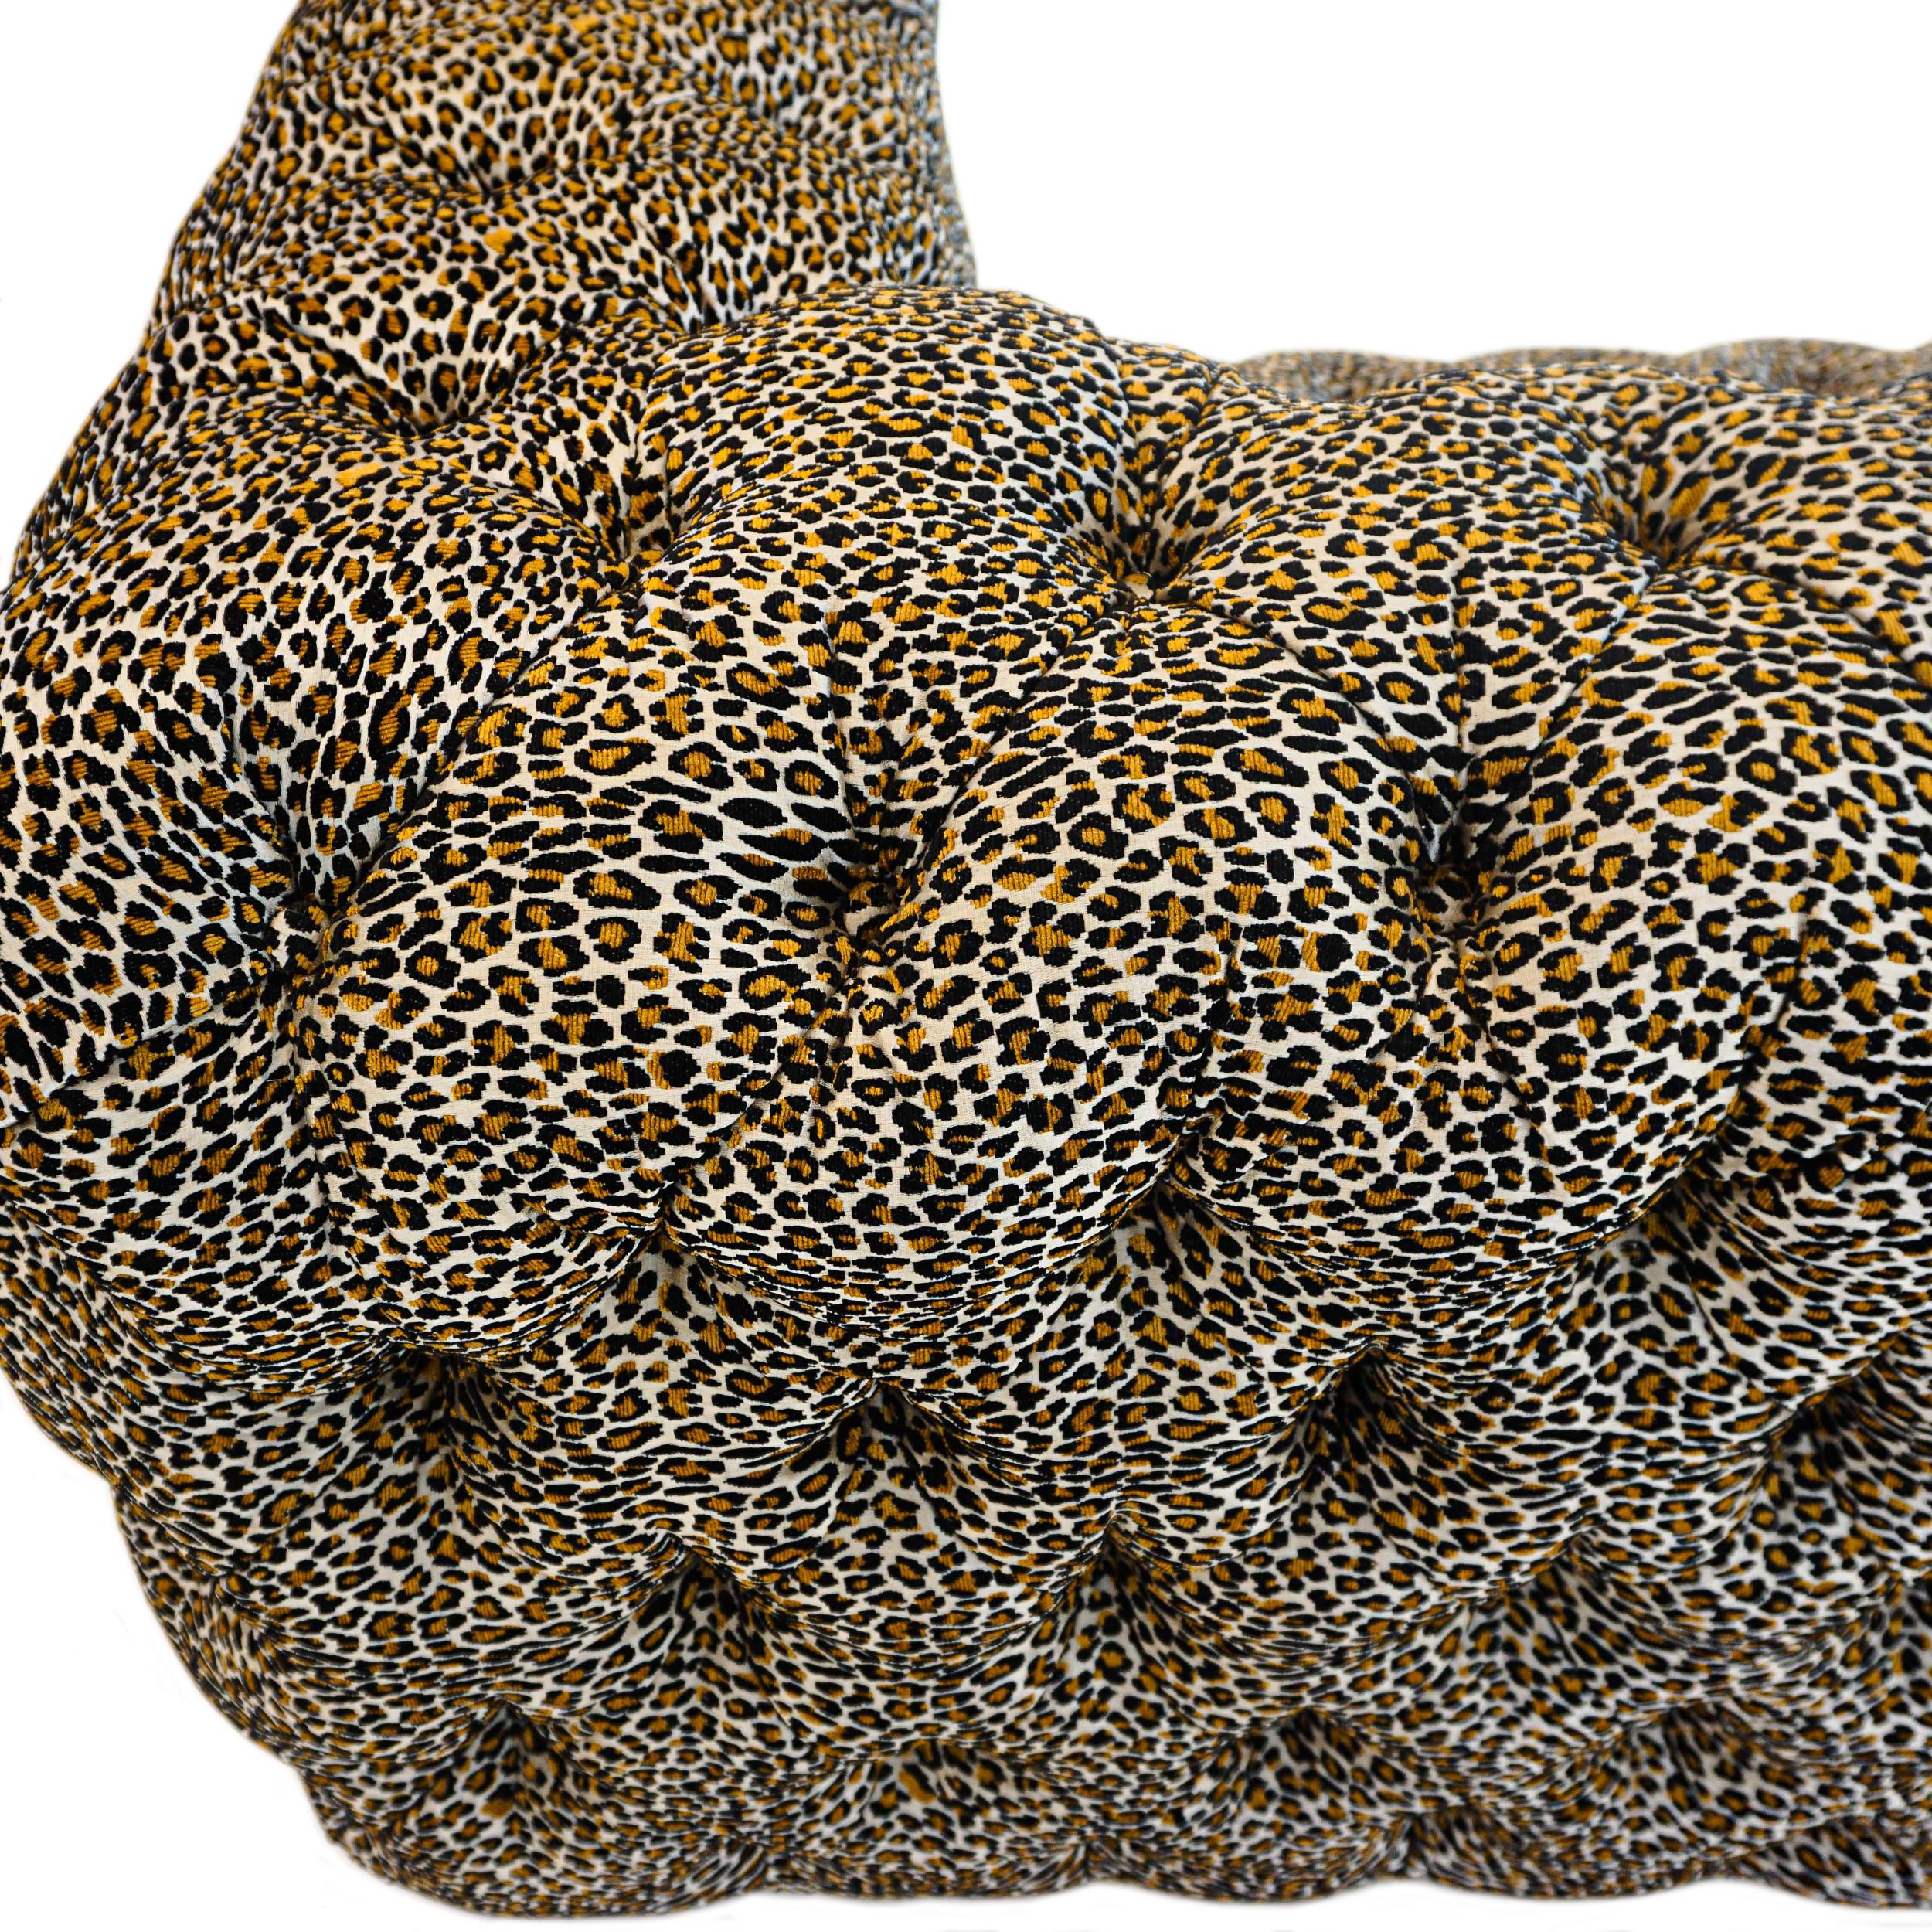 Tufted Leopard Print Sofa For Sale 7